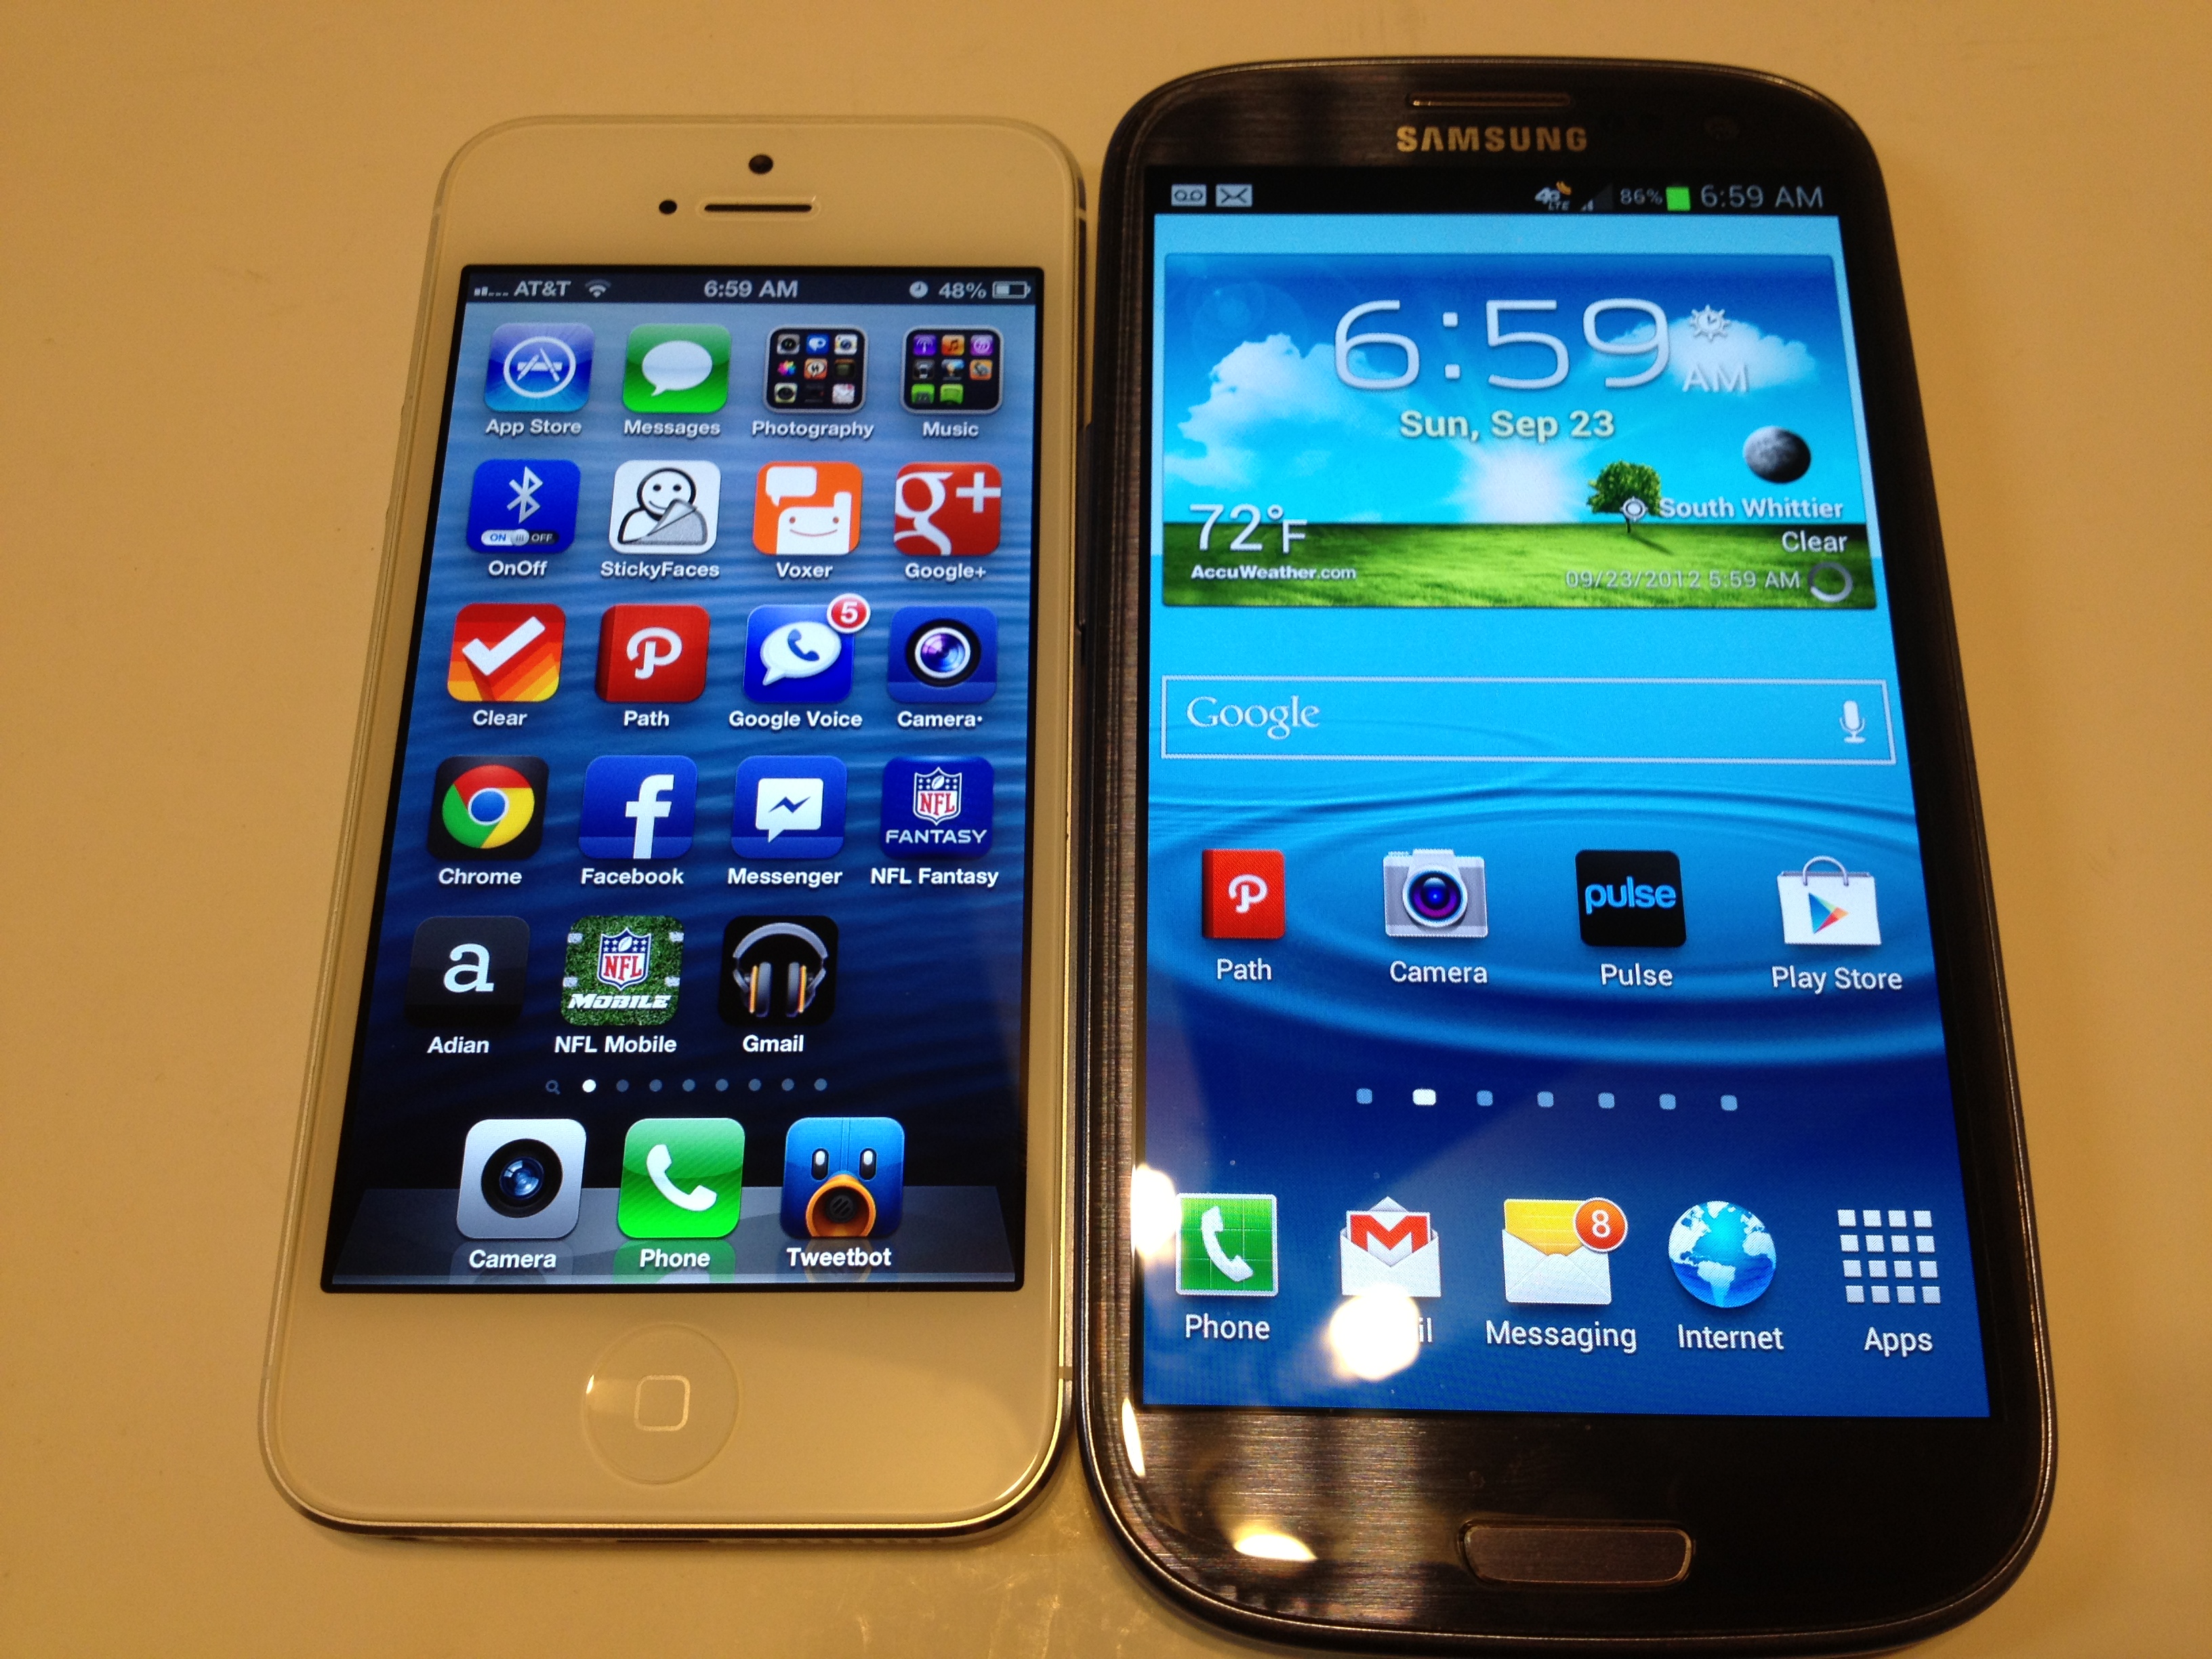 Galaxy iphone 5. Iphone Samsung s3. Айфон 5 самсунг. Samsung Galaxy s III И iphone 4. Айфон и самсунг галакси s3.